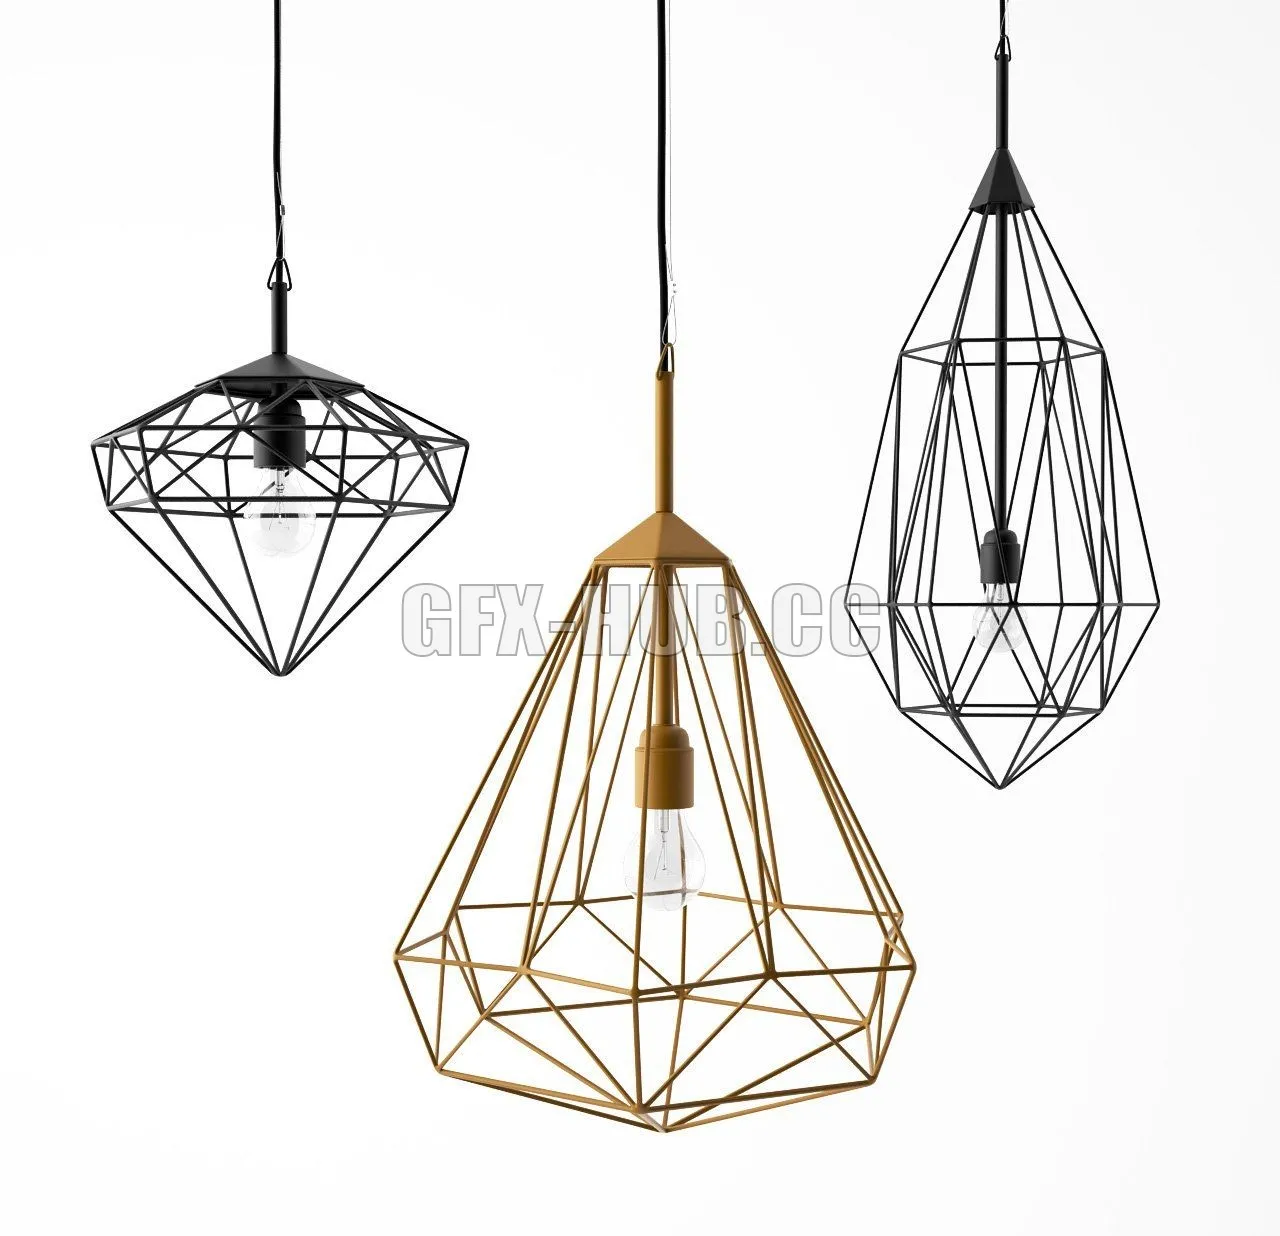 CEILING LIGHT – Diamonds ceiling lamp by JSPR